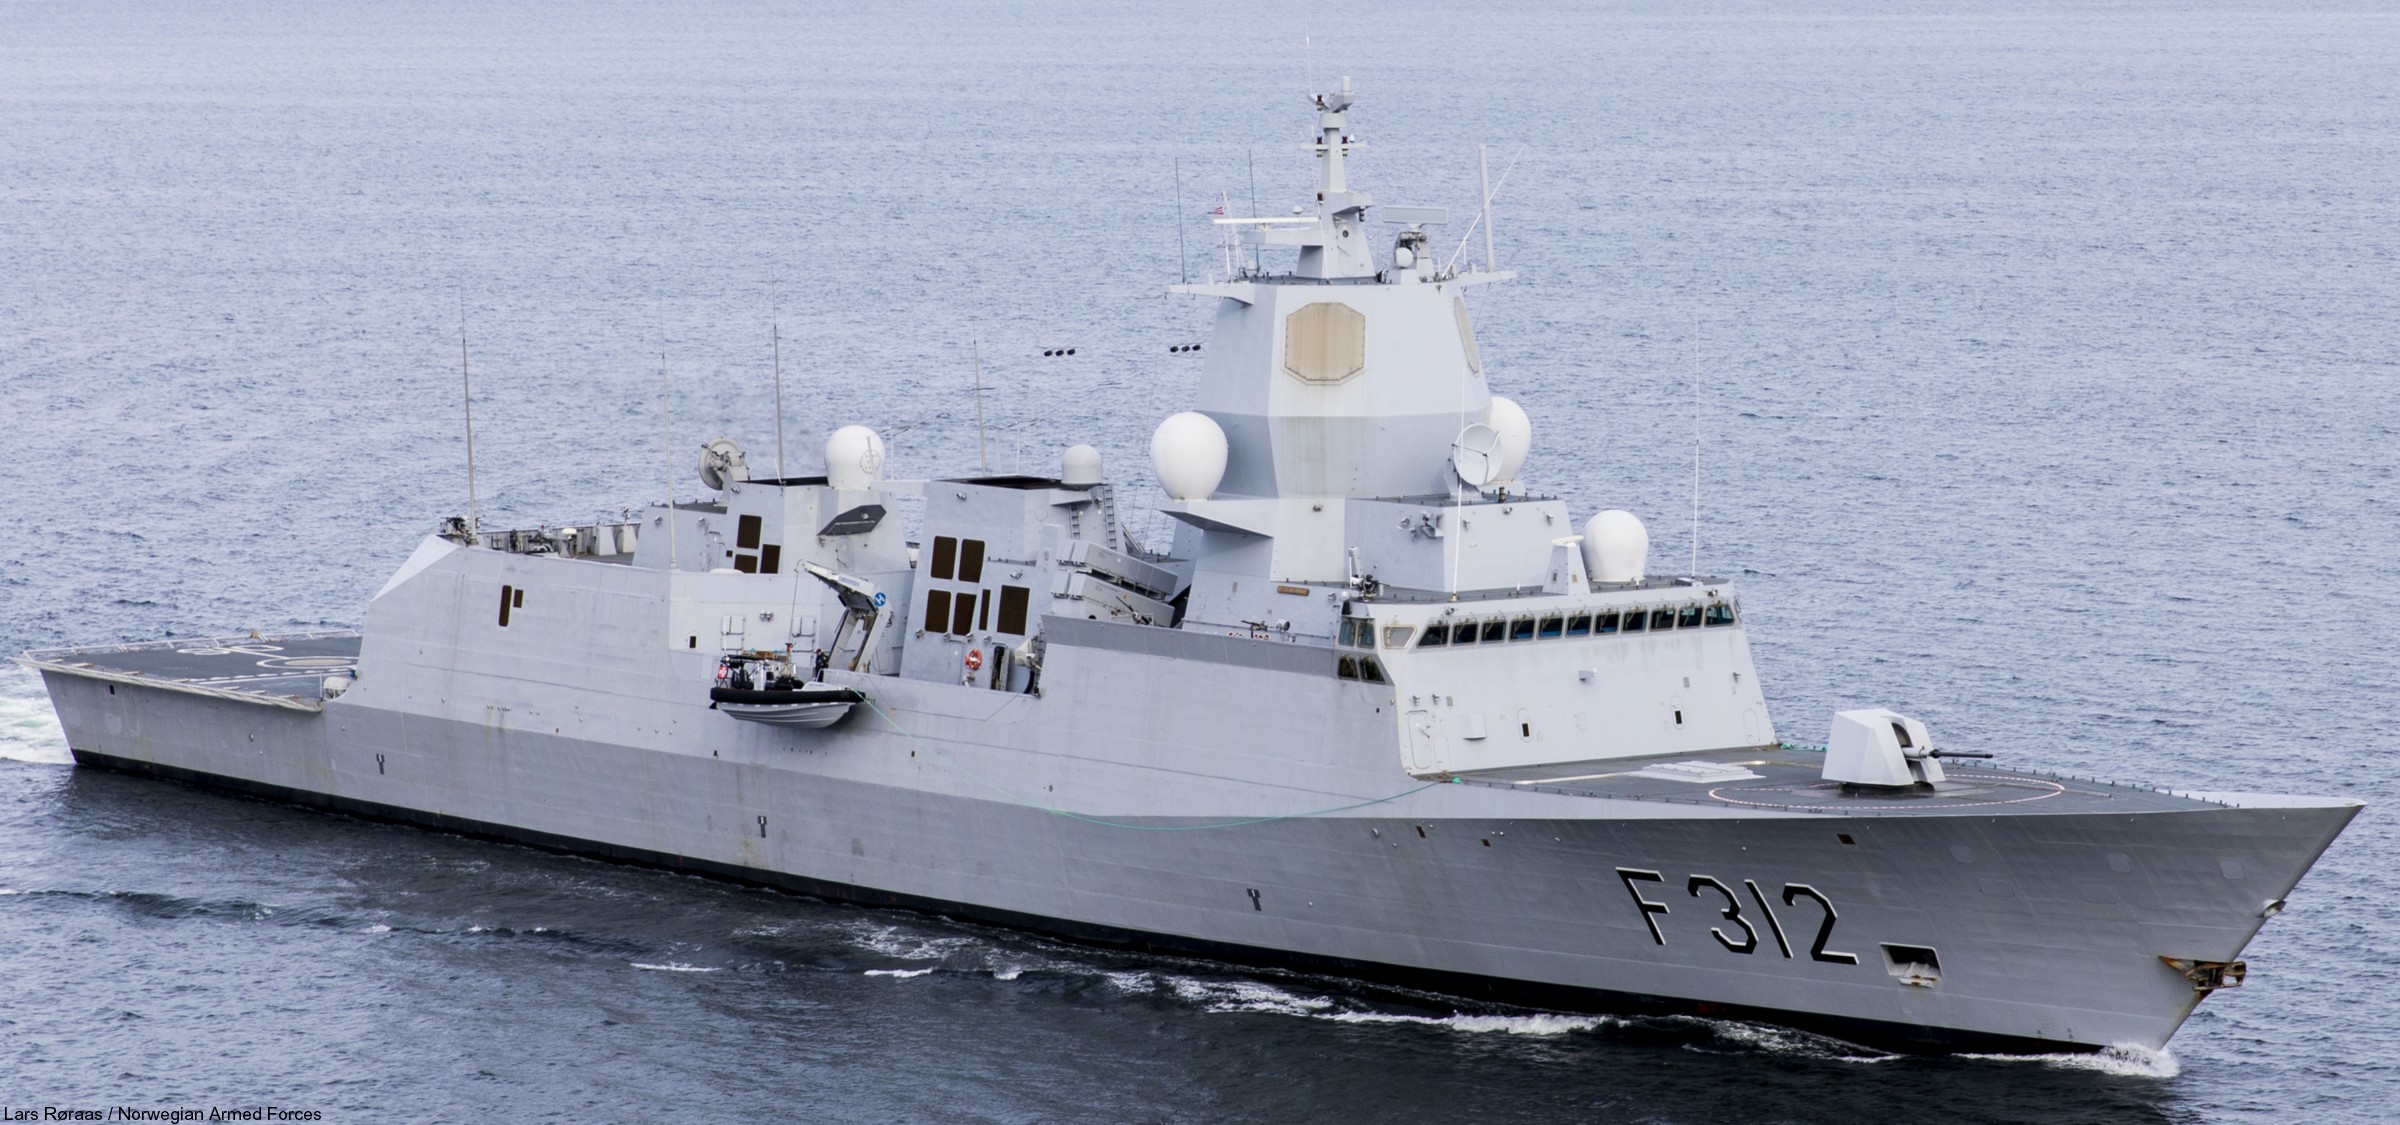 f-312 hnoms knm otto sverdrup nansen class frigate royal norwegian navy sjoforsvaret navantia bazan